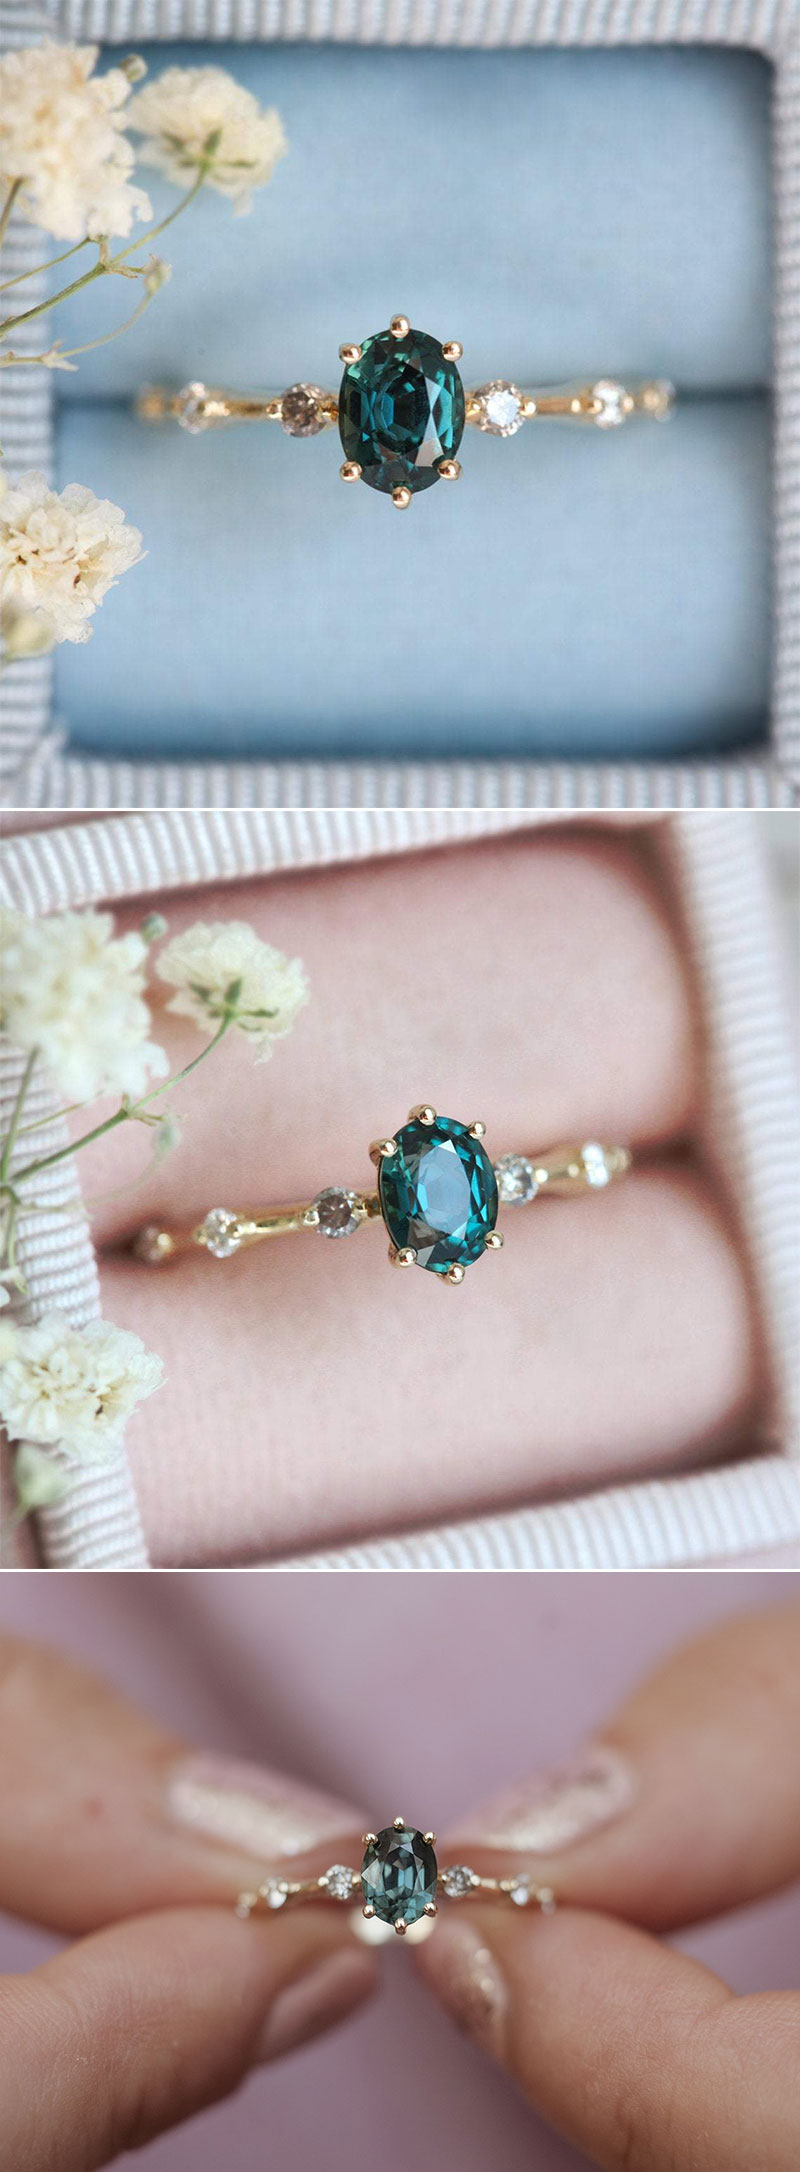 blue gemstone engagement rings diamond alternative 